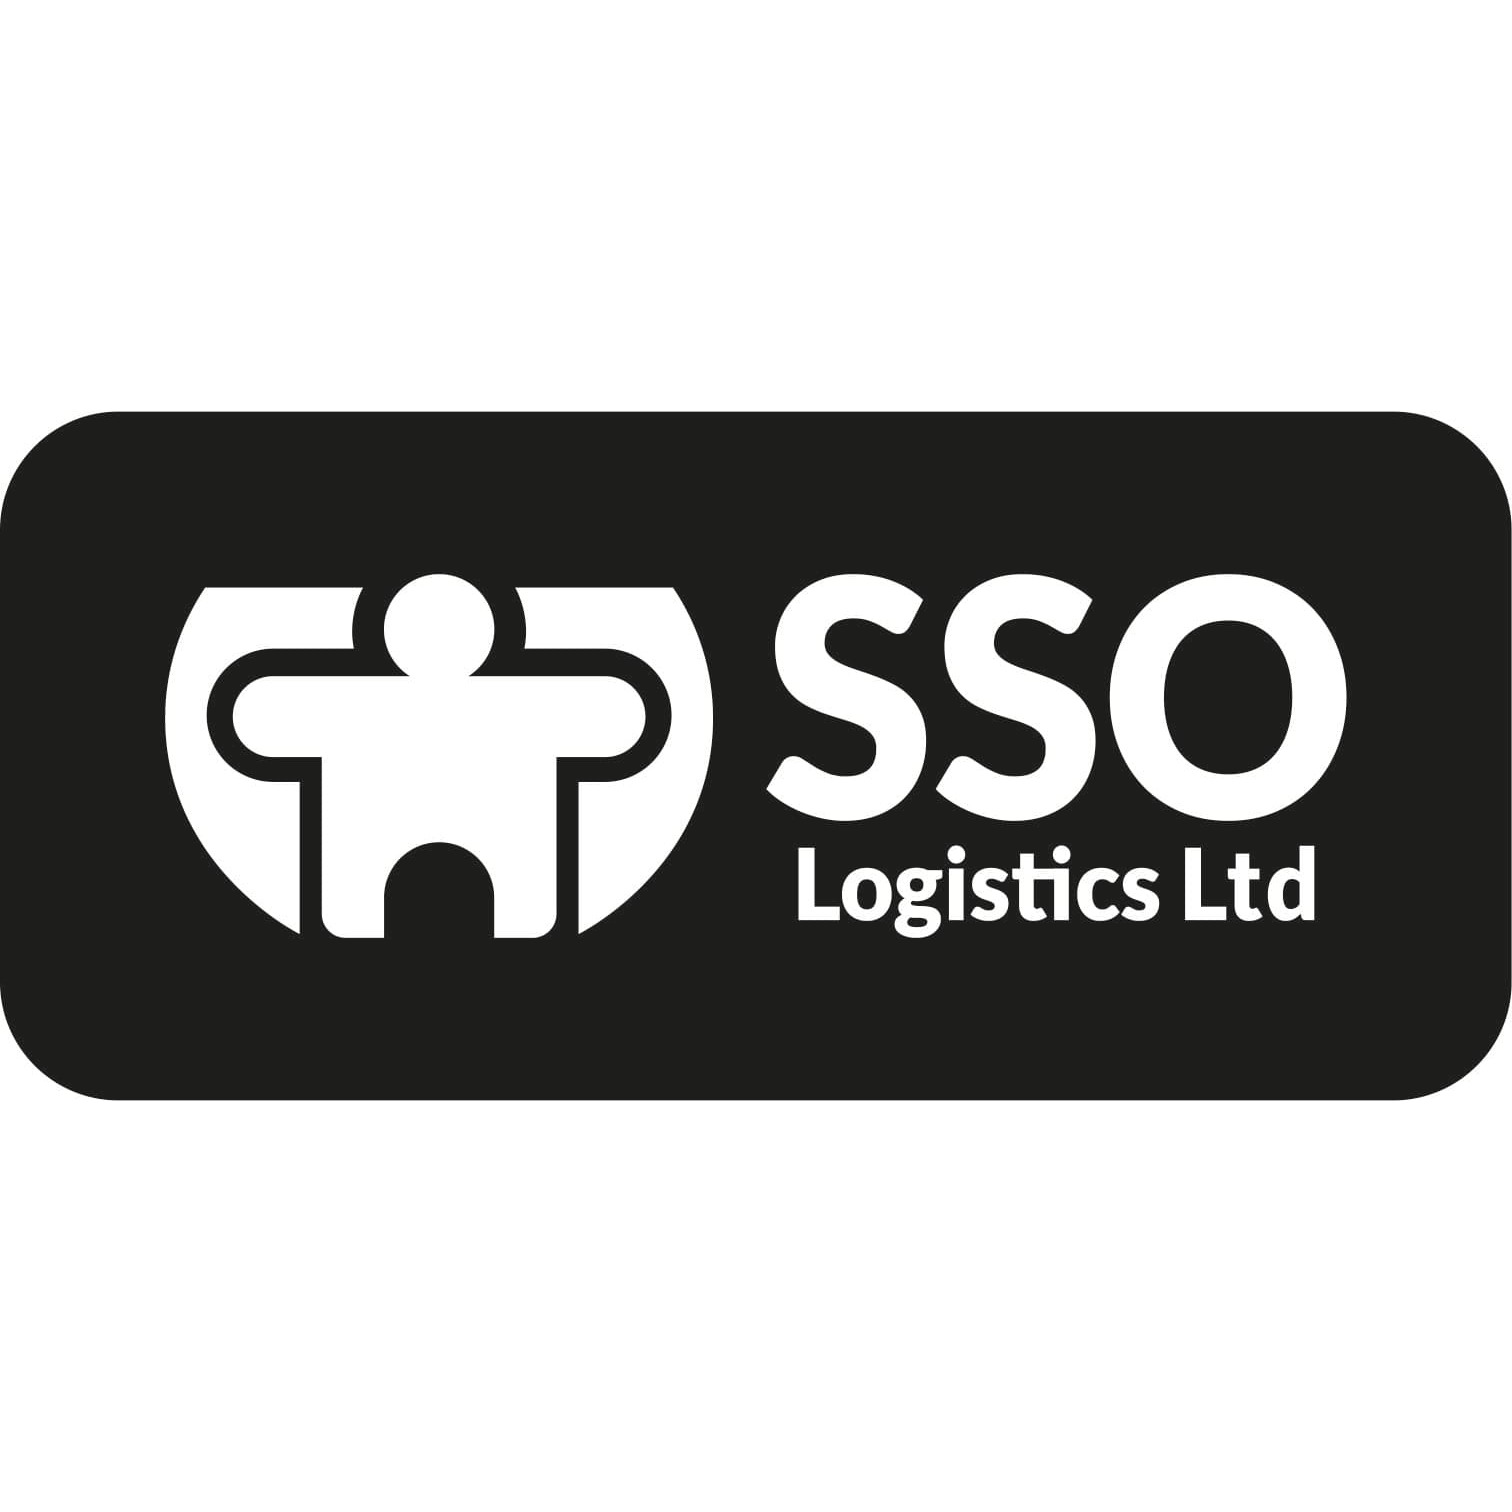 LOGO SSO Logistics Ltd St. Helens 01744 416999